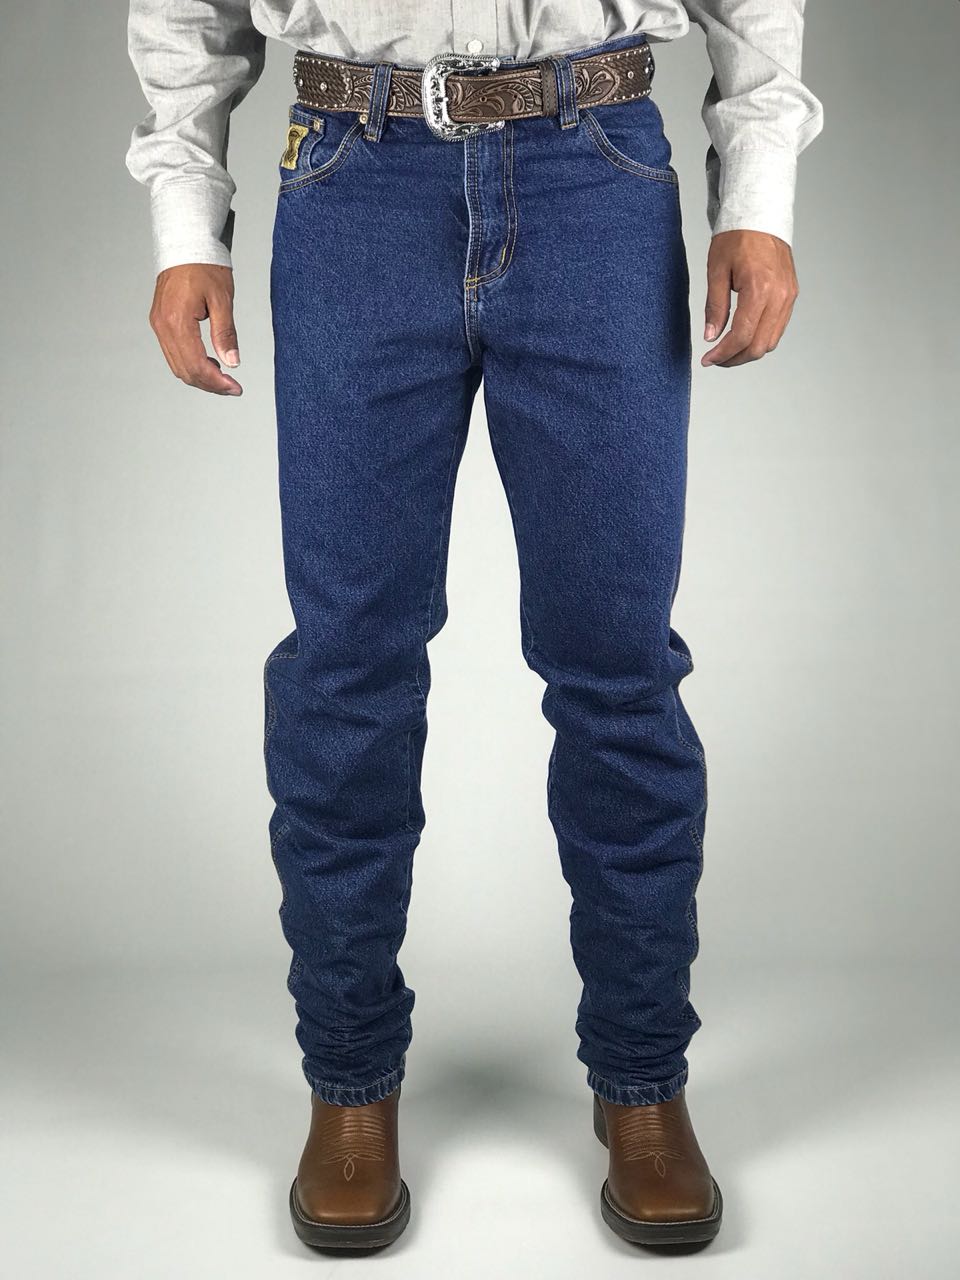 calça jeans masculina docks